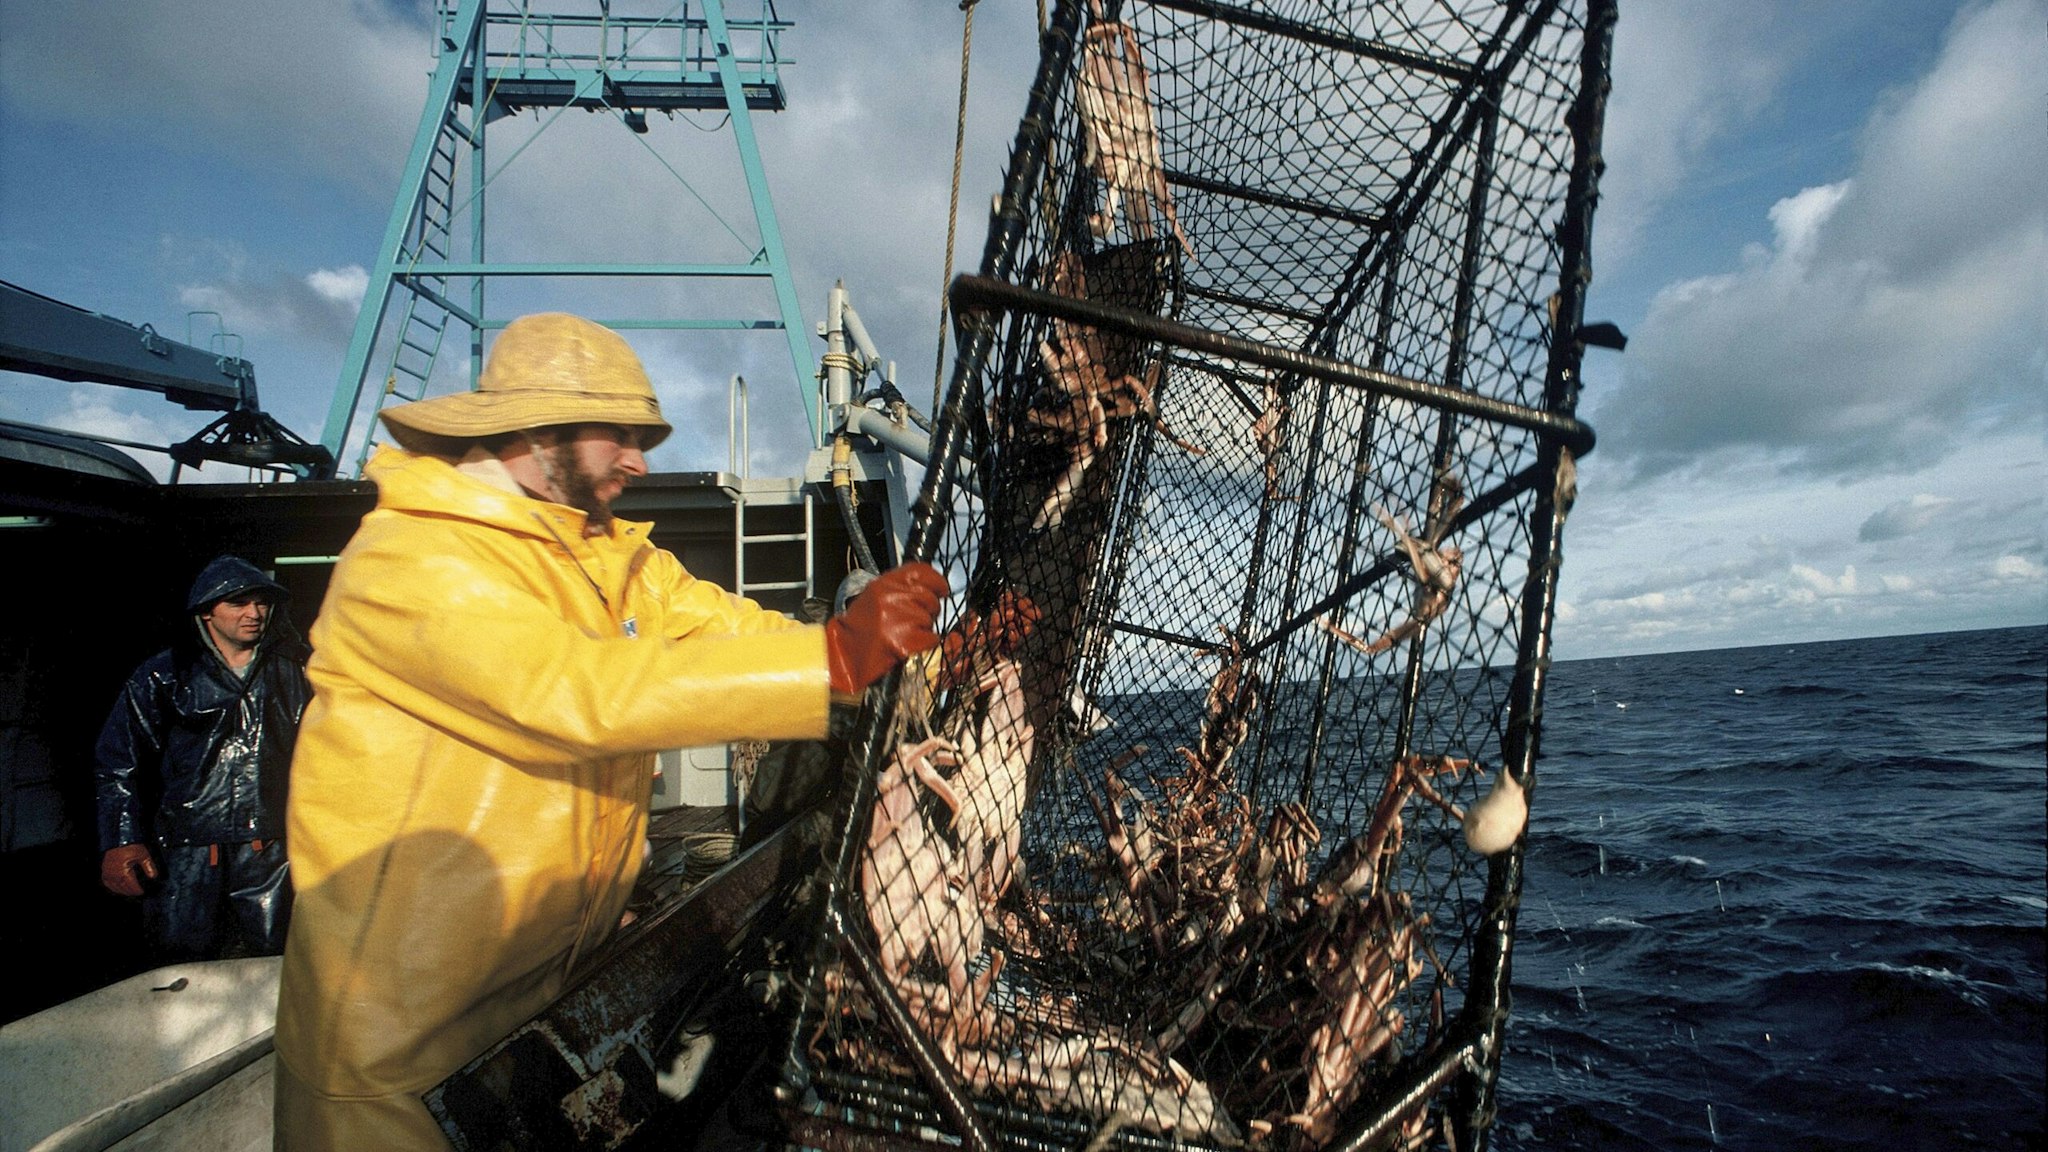 Fishing in Alaska, United States - Crab boat for king crab, Bering Sea.